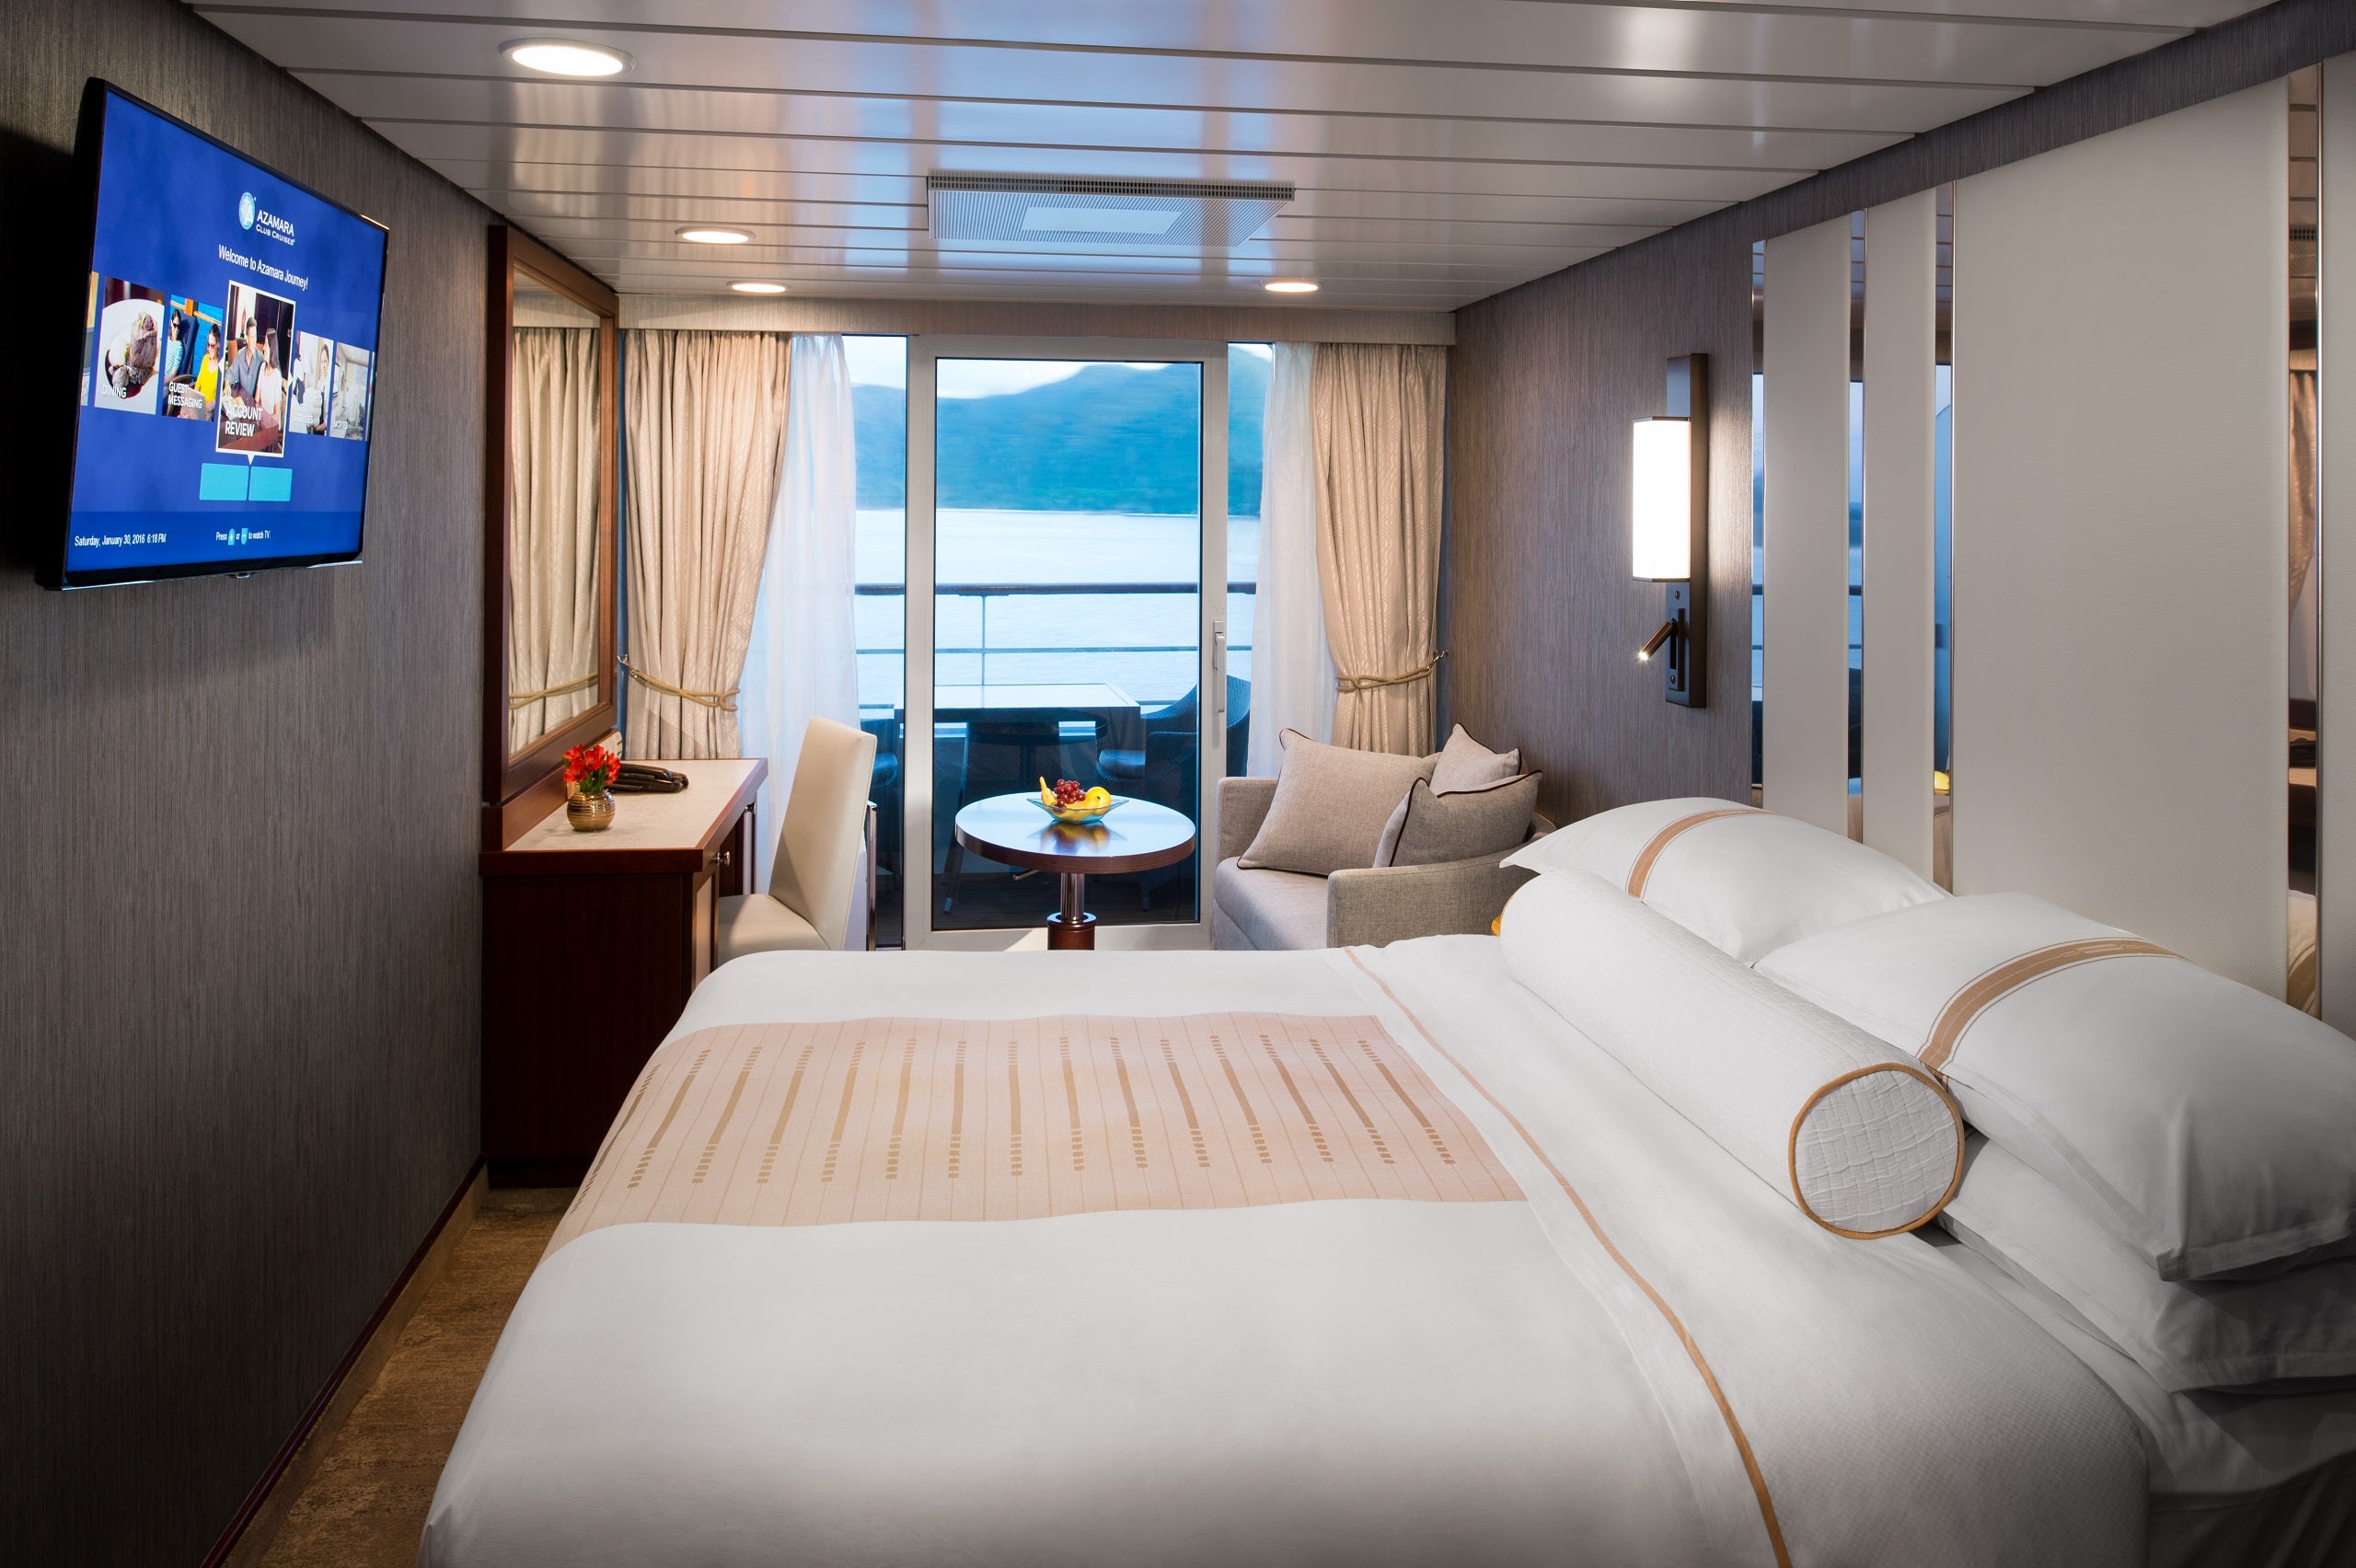 Azamara Cruises is a mid-level cruise line boasting more elegant, classic